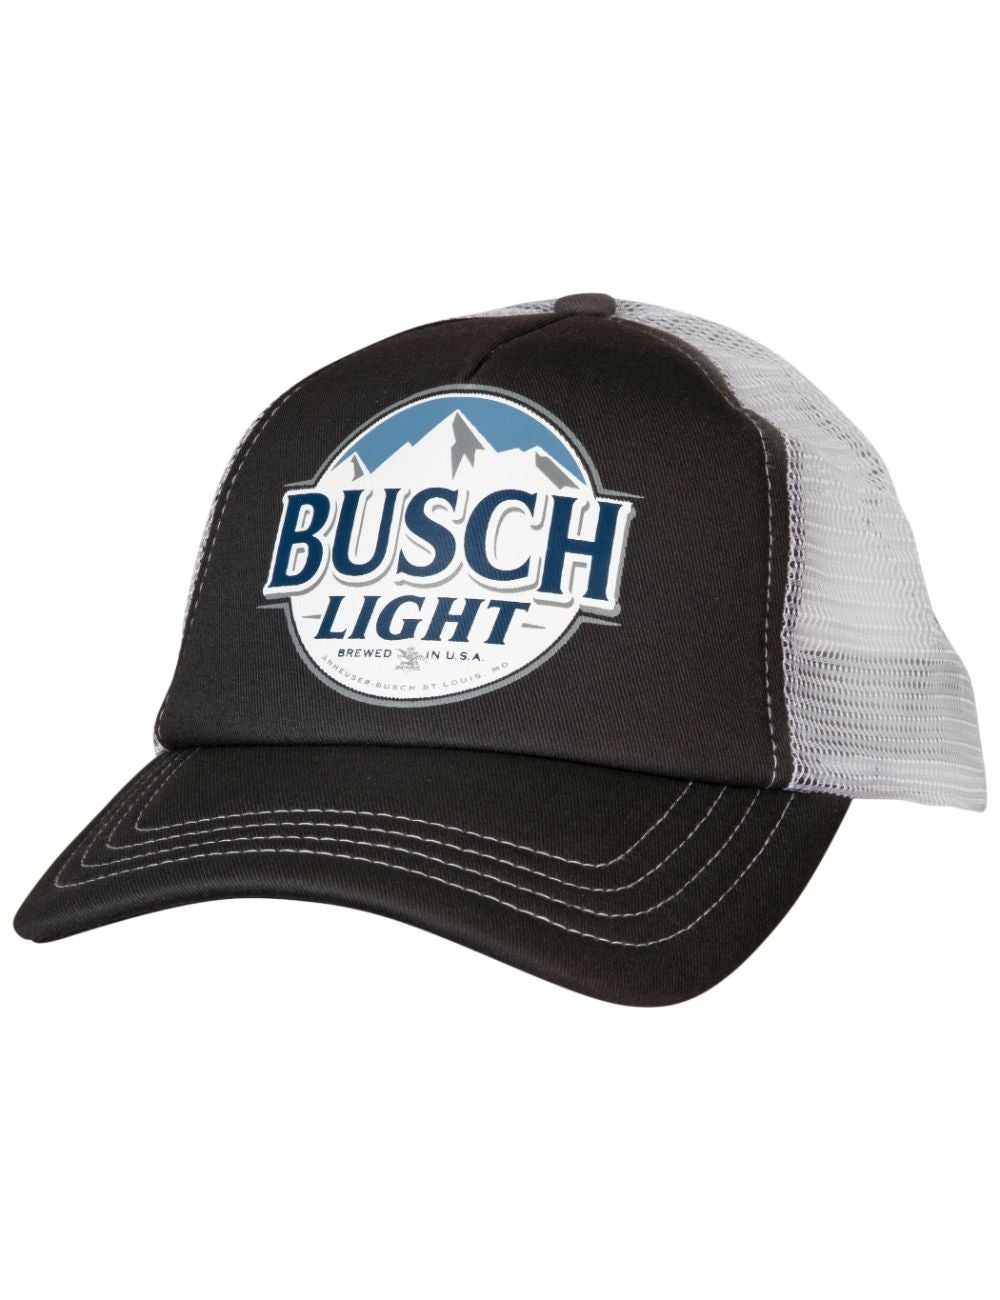 busch light snapback hat,SAVE 68% 